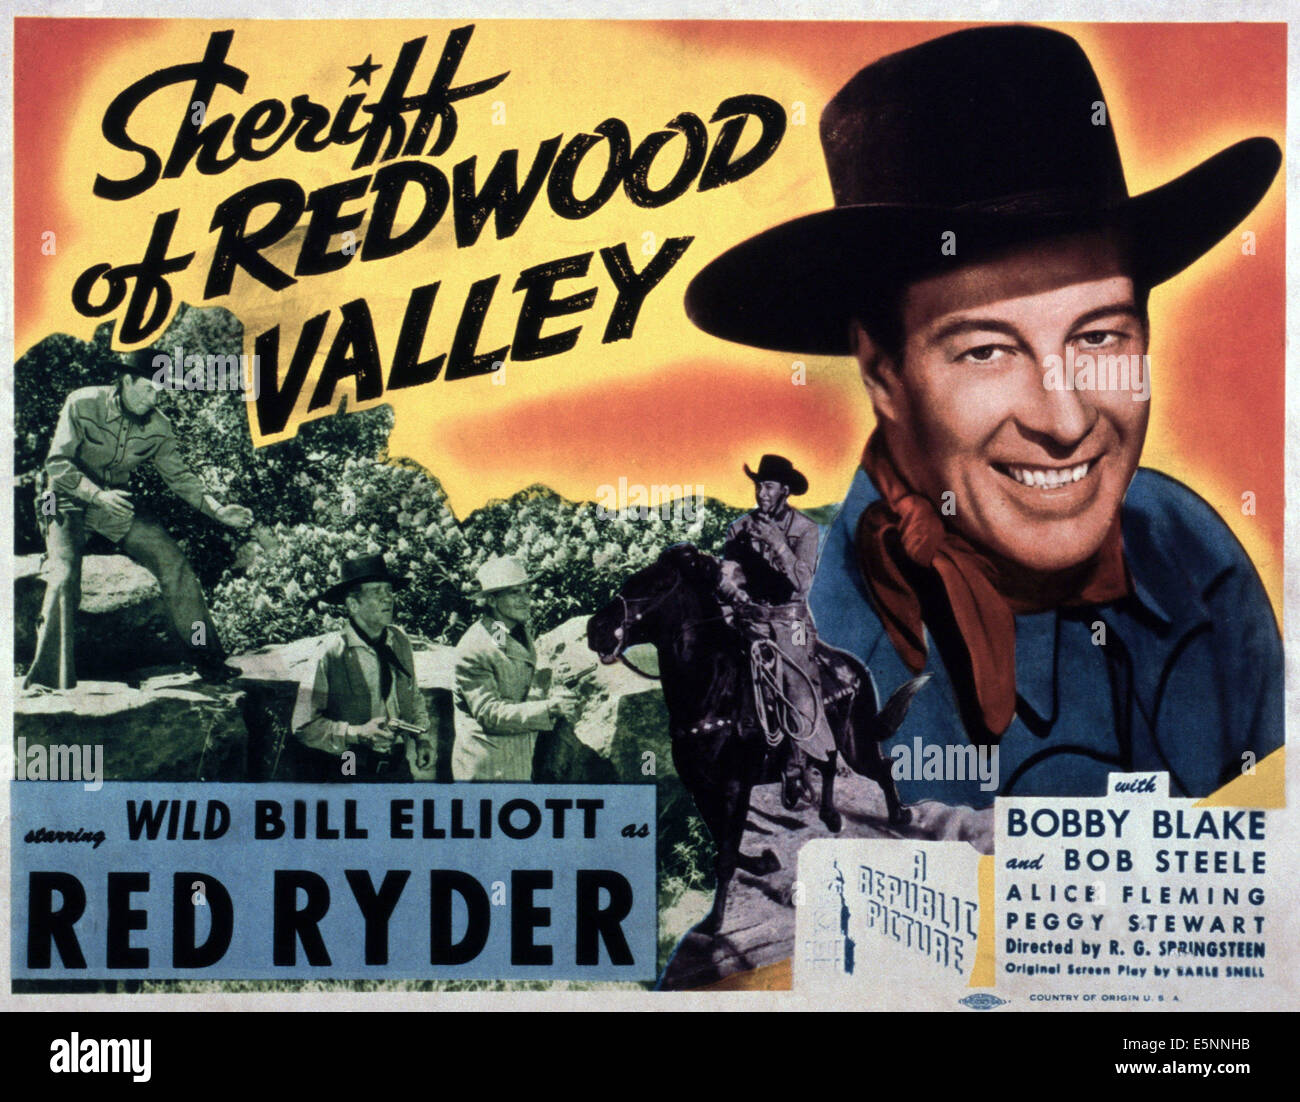 SHERIFF OF REDWOOD VALLEY, US poster, Bill Elliott (right), 1946 Stock Photo